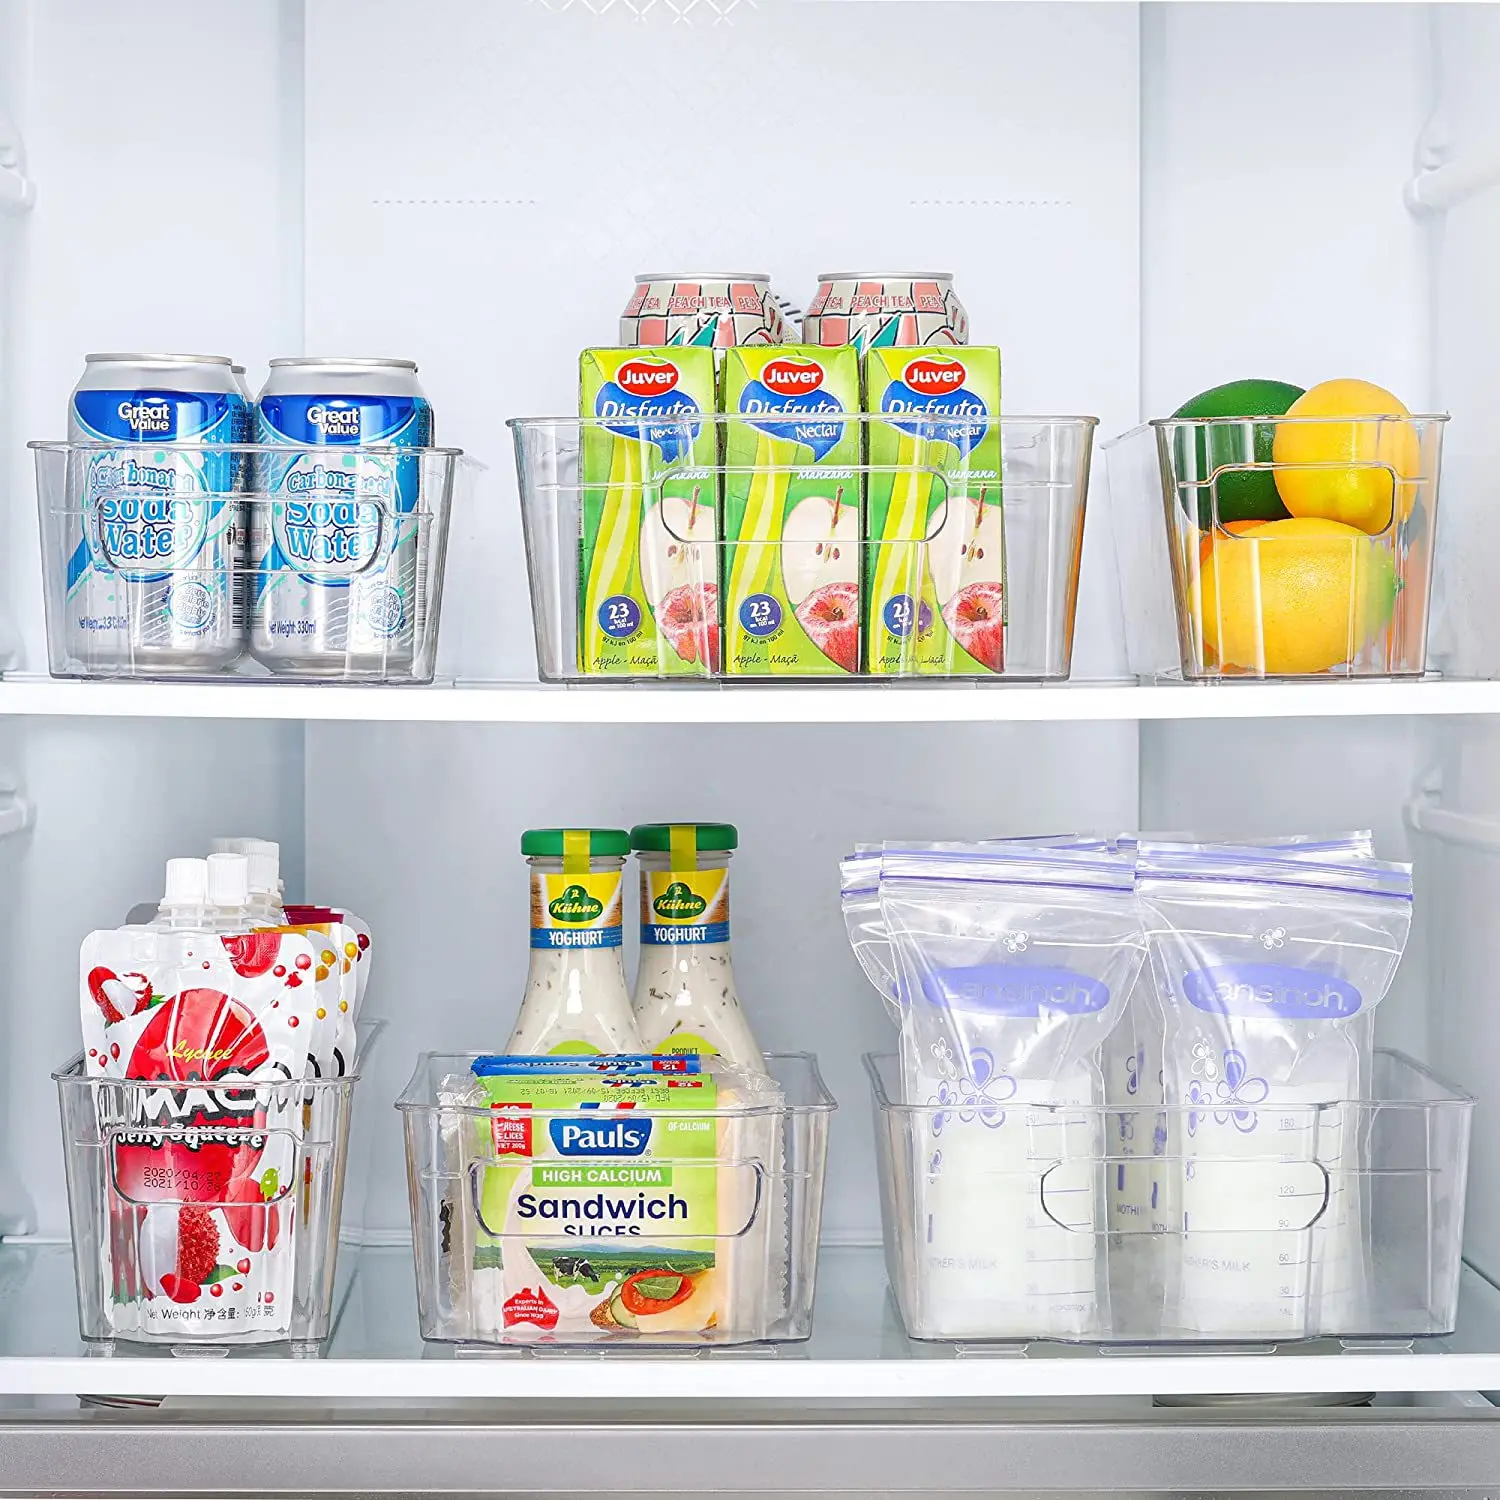 

Storage Basket Storage Fridge Bins - Refrigerator Organizer Bins for Fridge Freezer Pantry And Kitchen Set Stackable